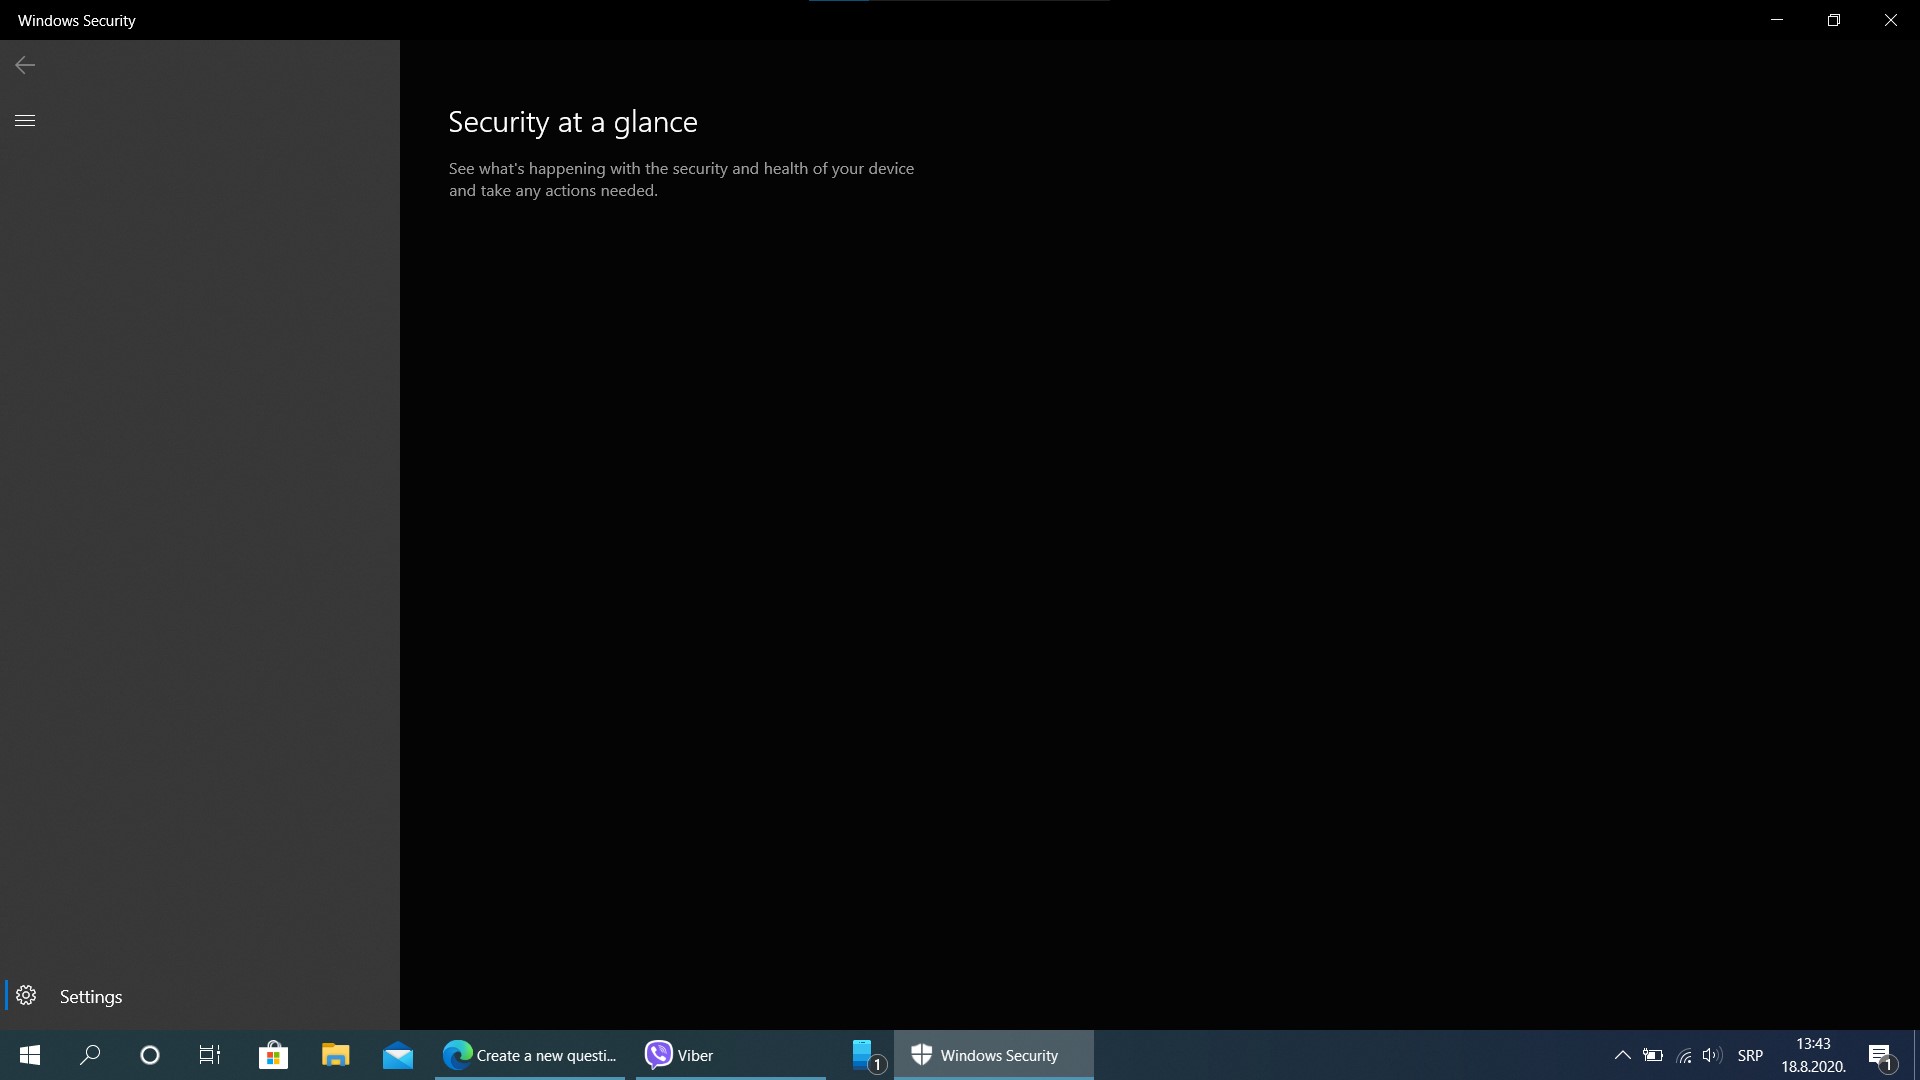 Windows Security blank screen HELP 4fdfcd40-d722-48f7-87d4-2dff4c0fb974?upload=true.jpg